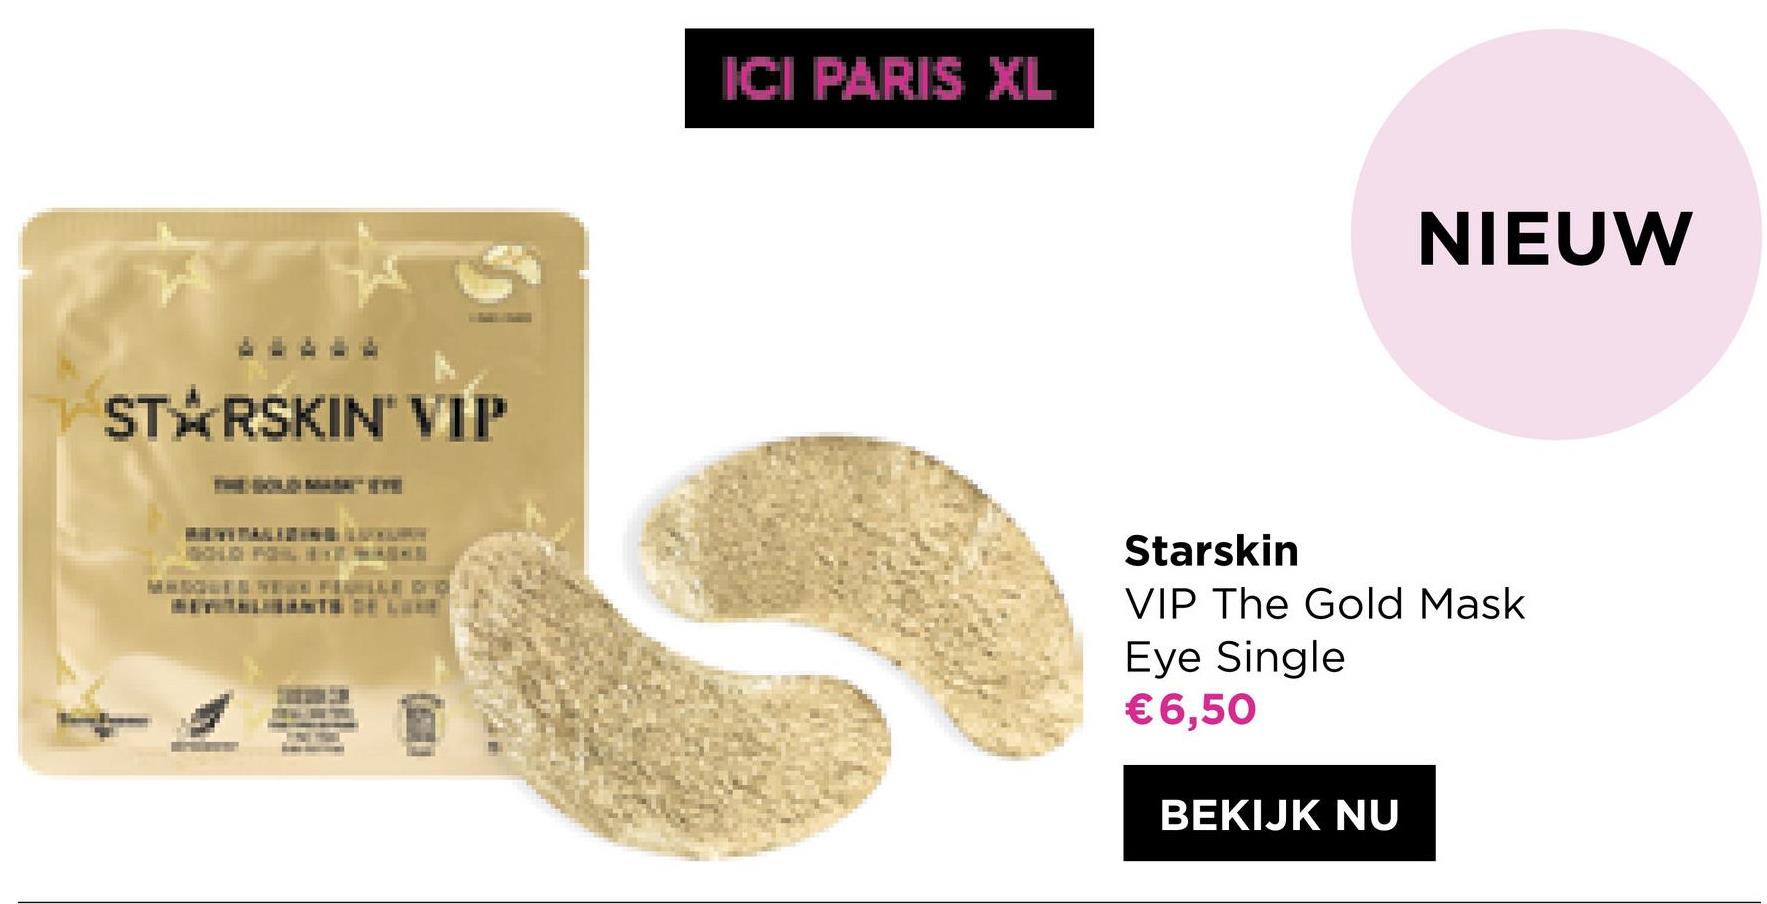 ICI PARIS XL
NIEUW
STARSKIN' VIP
Starskin
VIP The Gold Mask
Eye Single
€6,50
BEKIJK NU
